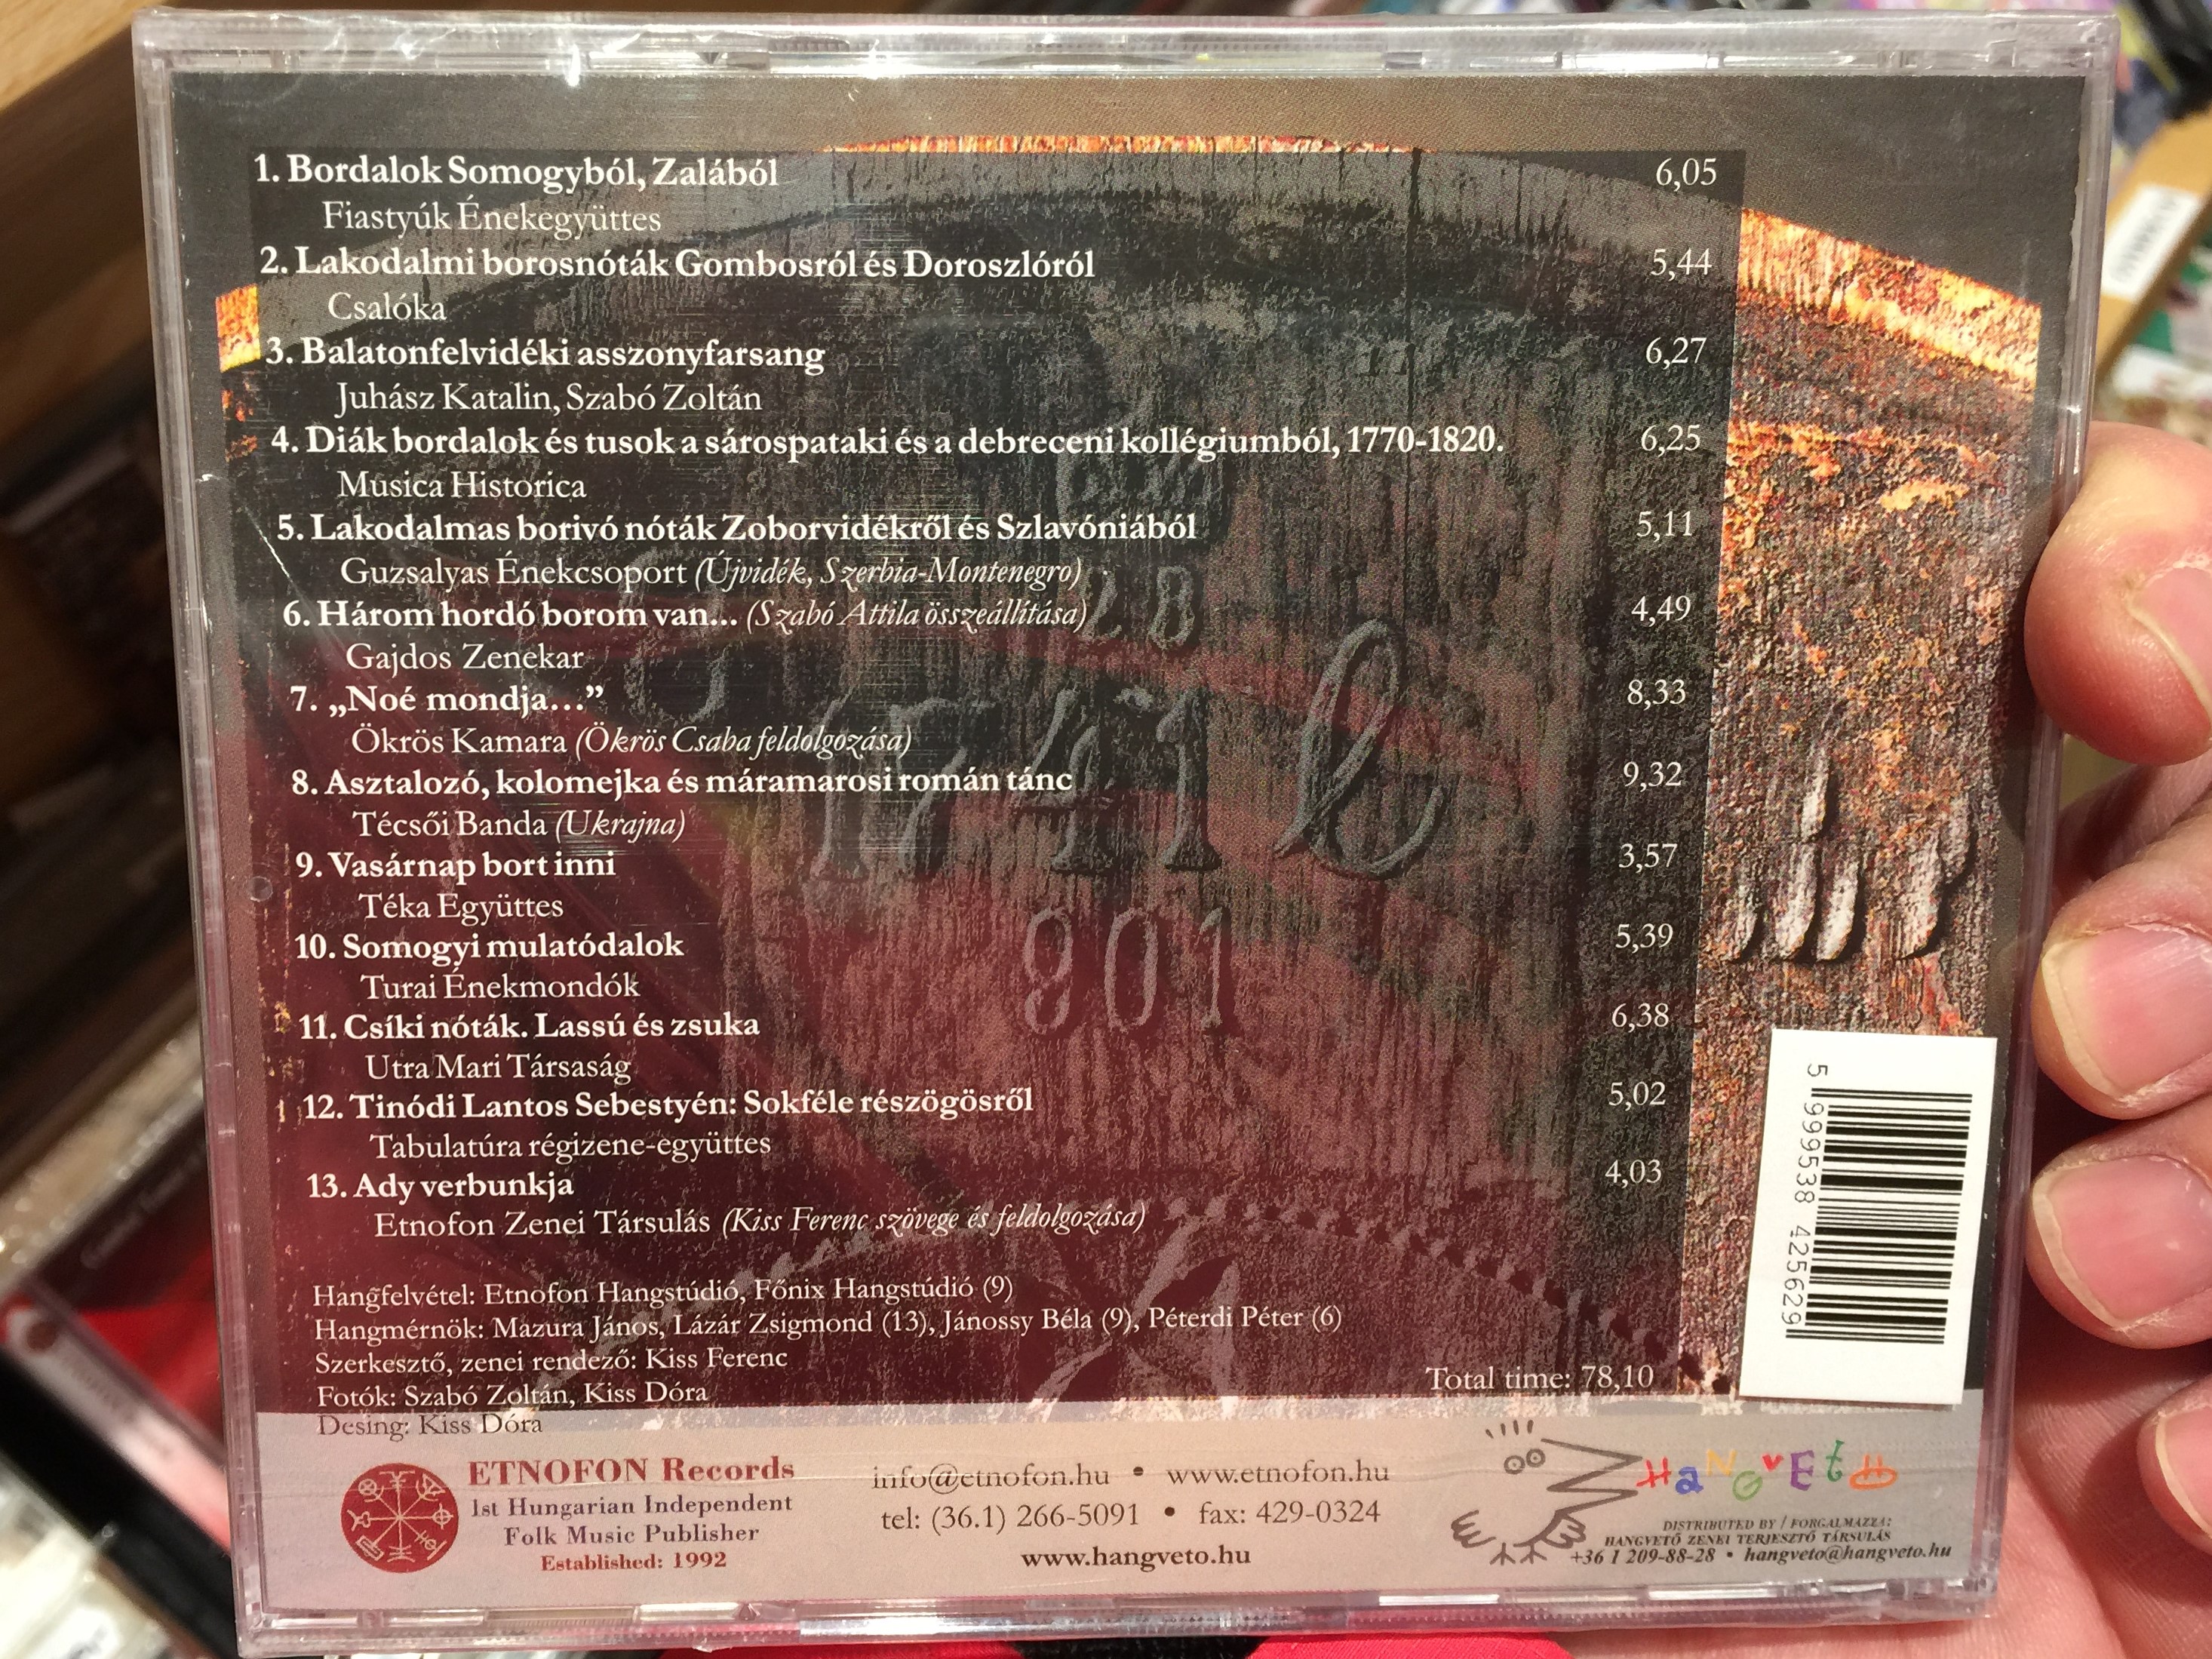 no-mondta-born-pek-dalai-noah-once-said-hungarian-songs-in-celebration-of-wine-etnofon-audio-cd-2006-er-cd-088-2-.jpg